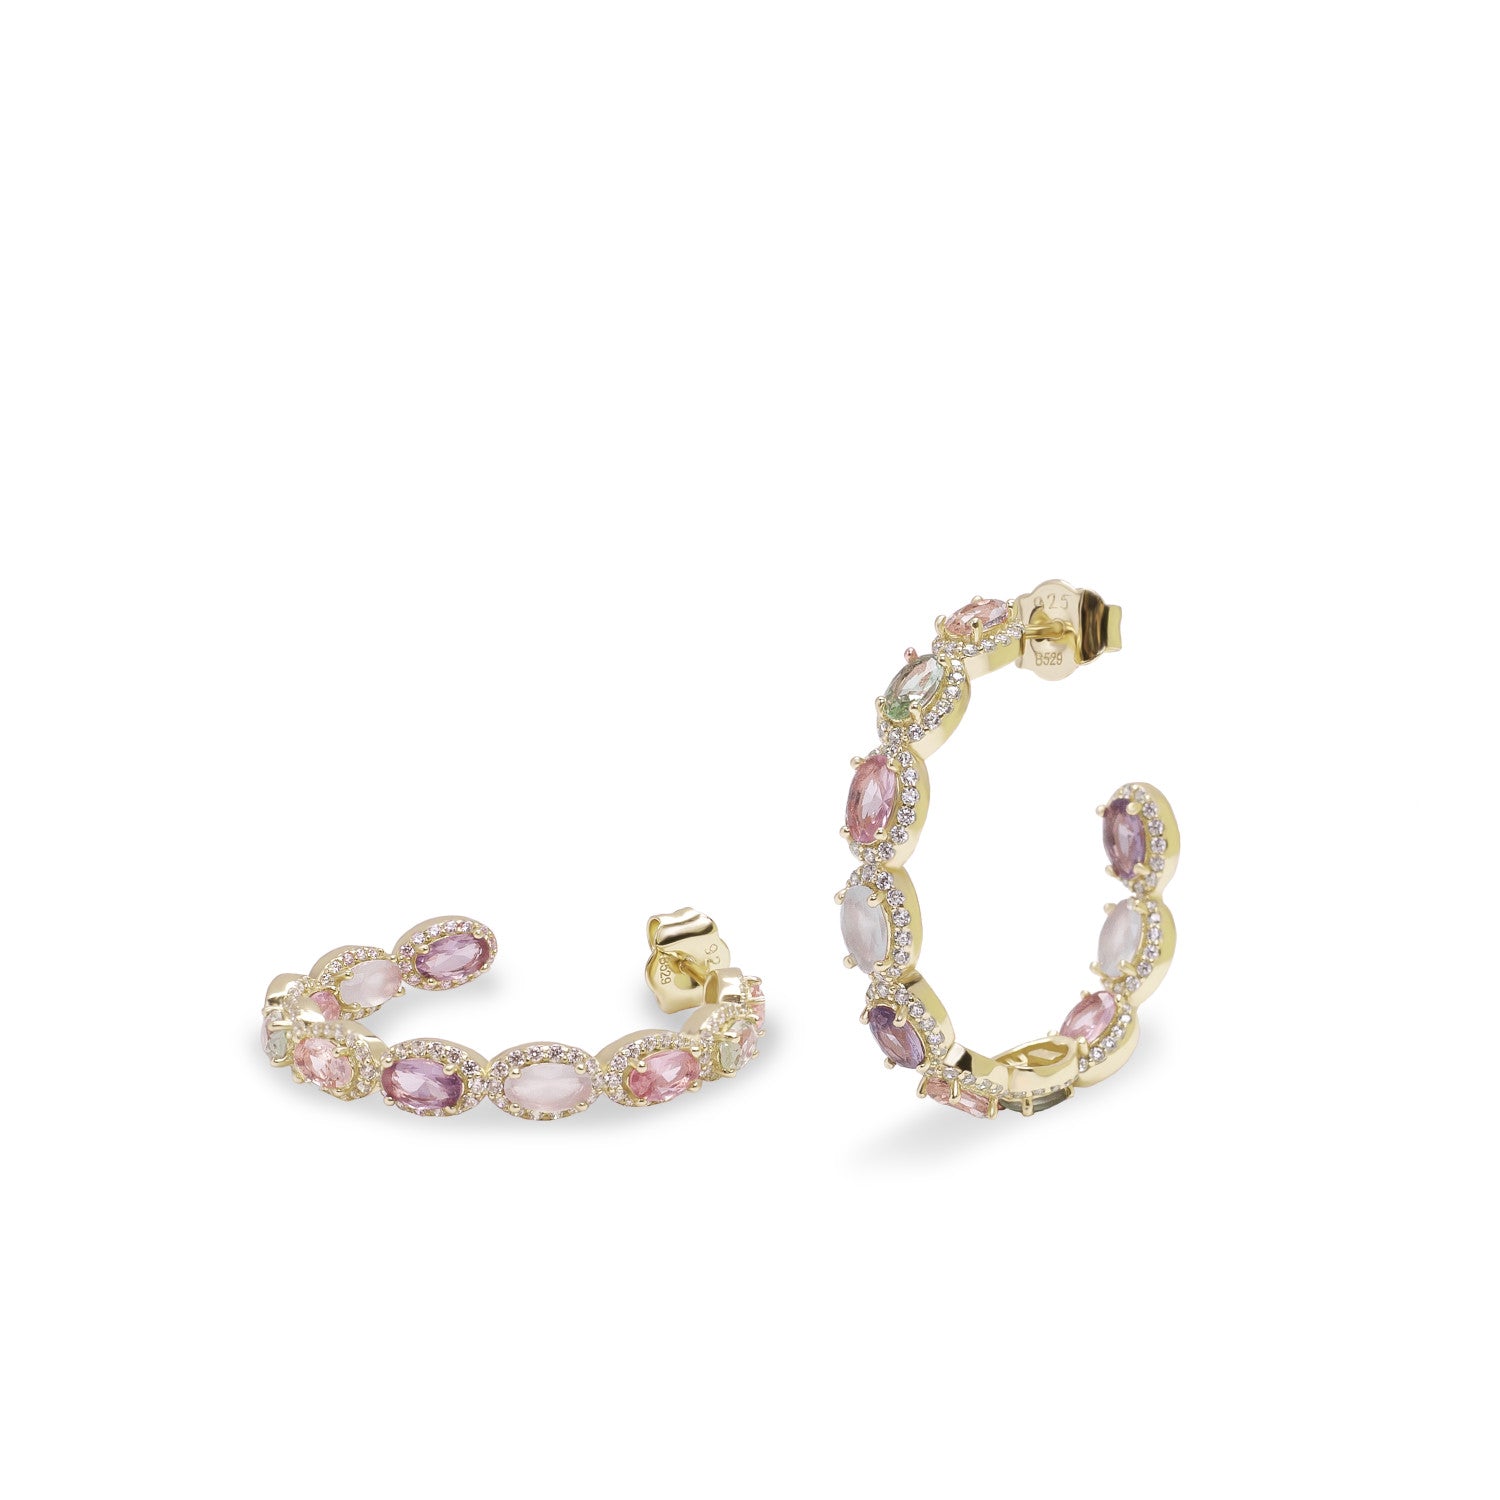 Hoop earrings with pink stones and zircons